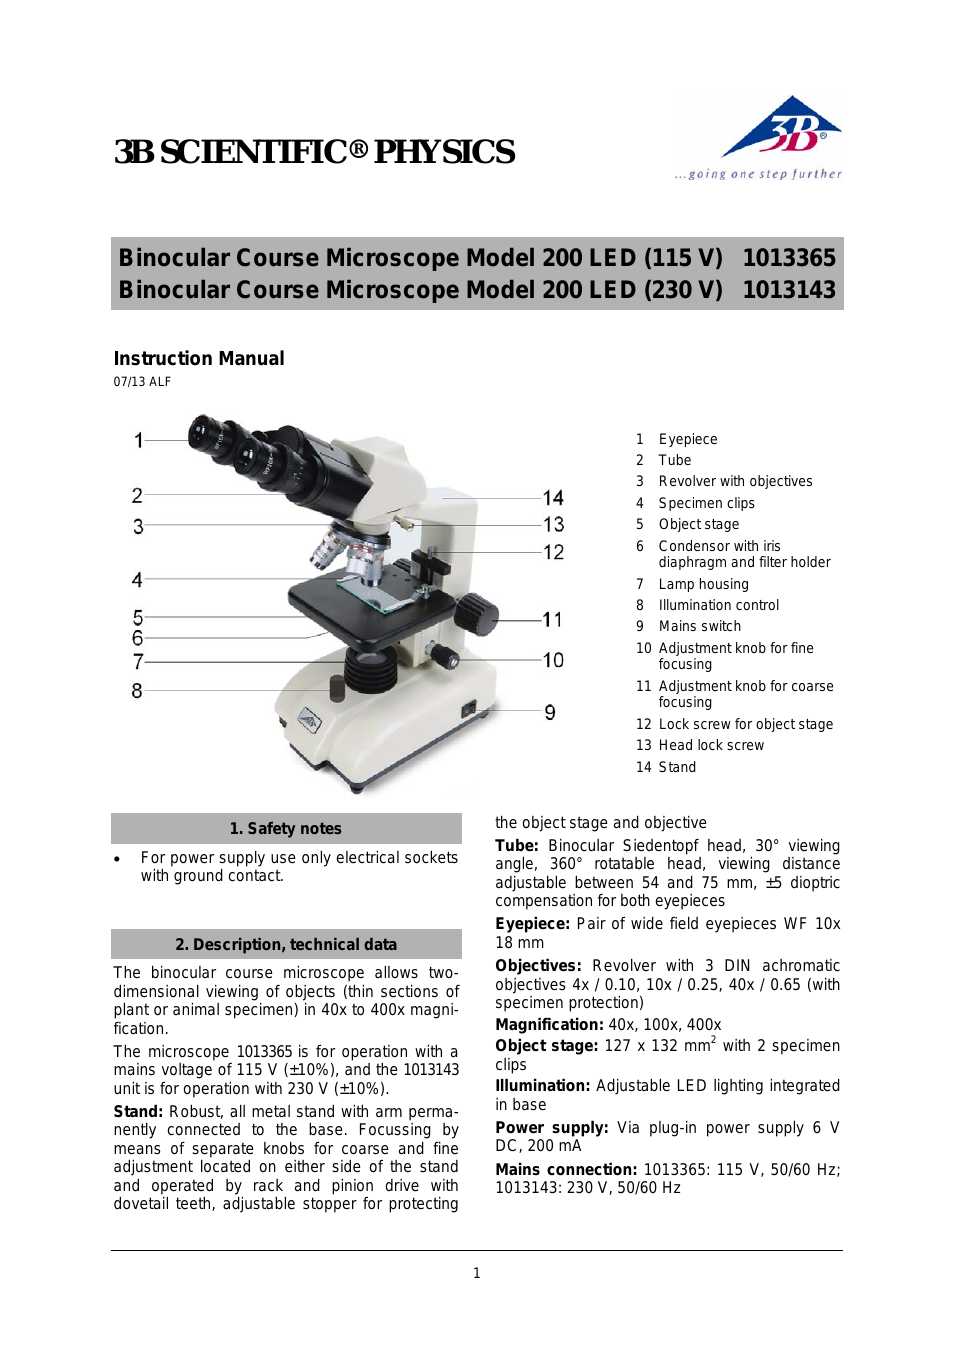 Binocular Course Microscope Model 200 LED (115 V, 50__60 Hz)